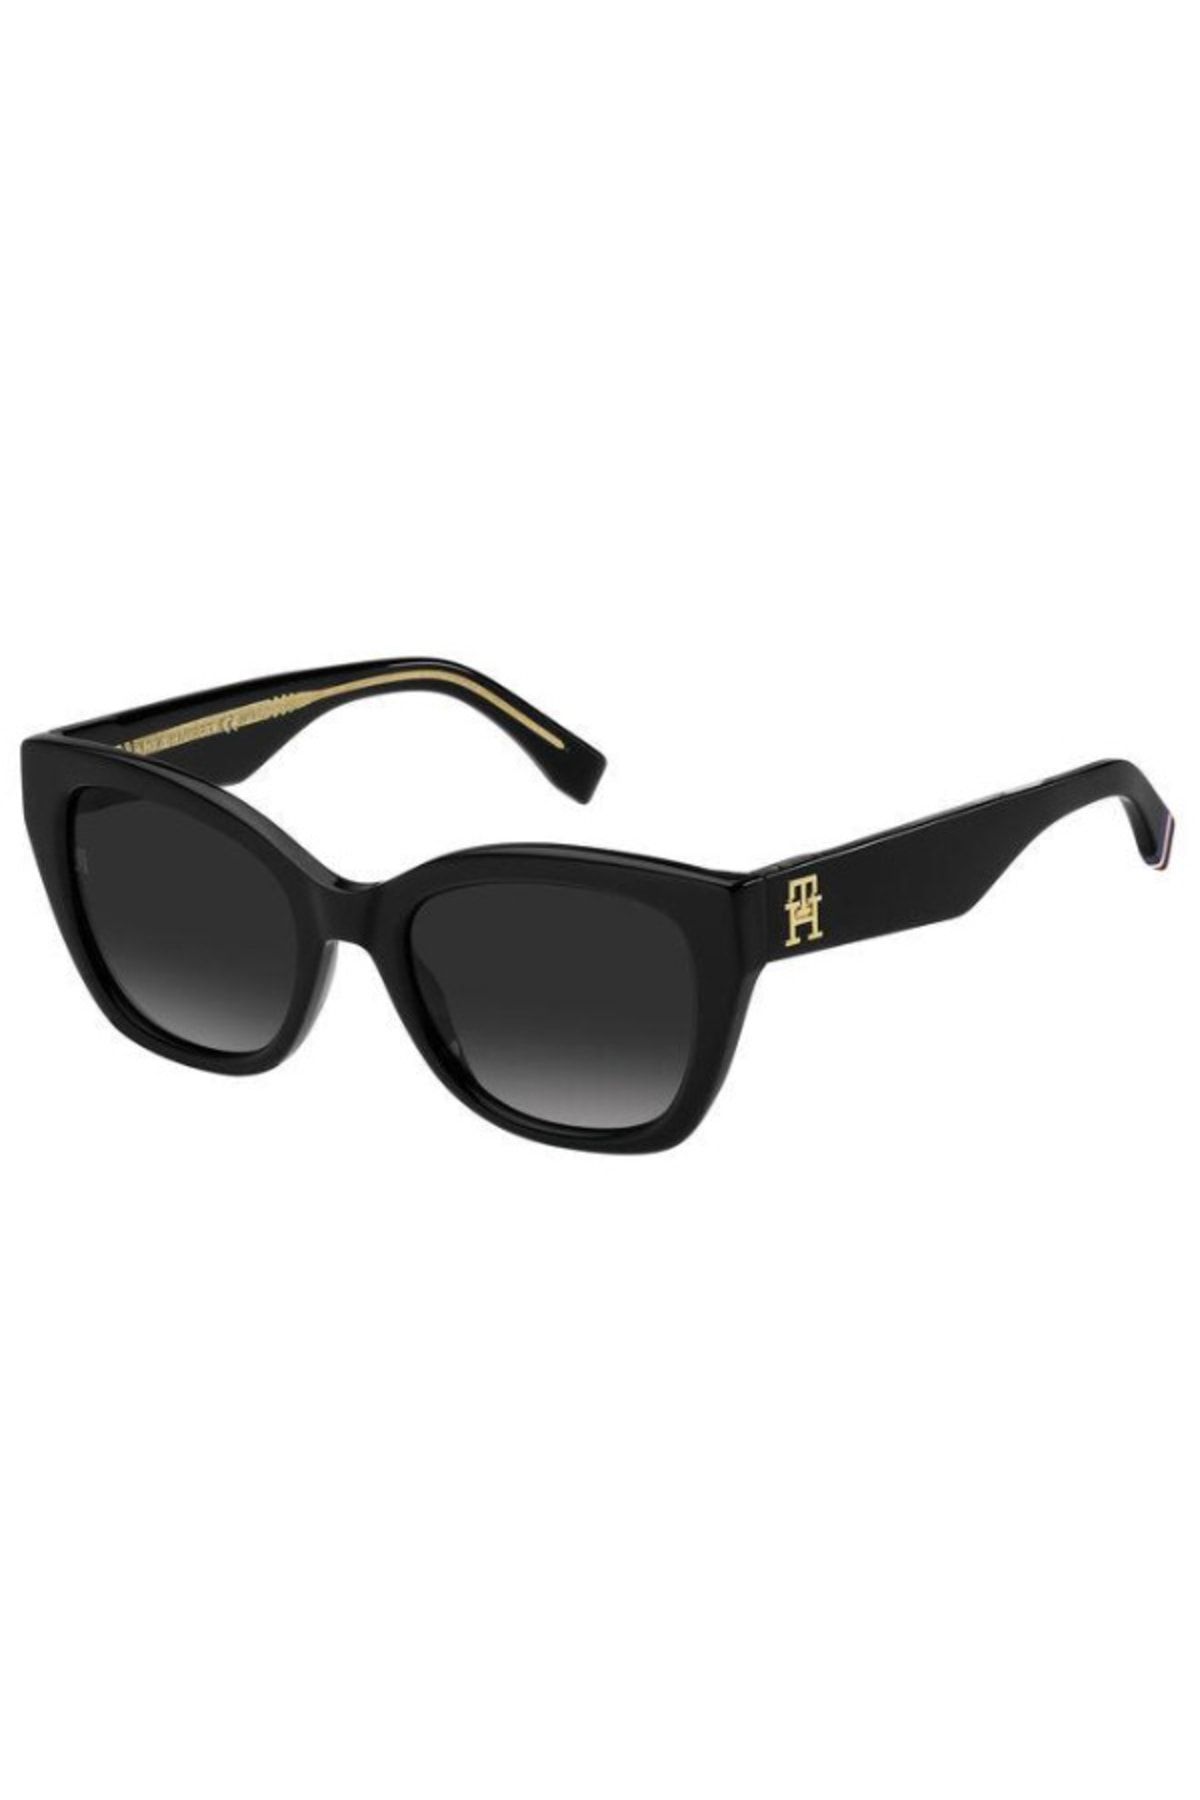 Tommy Hilfiger Sunglasses Th 1980/s